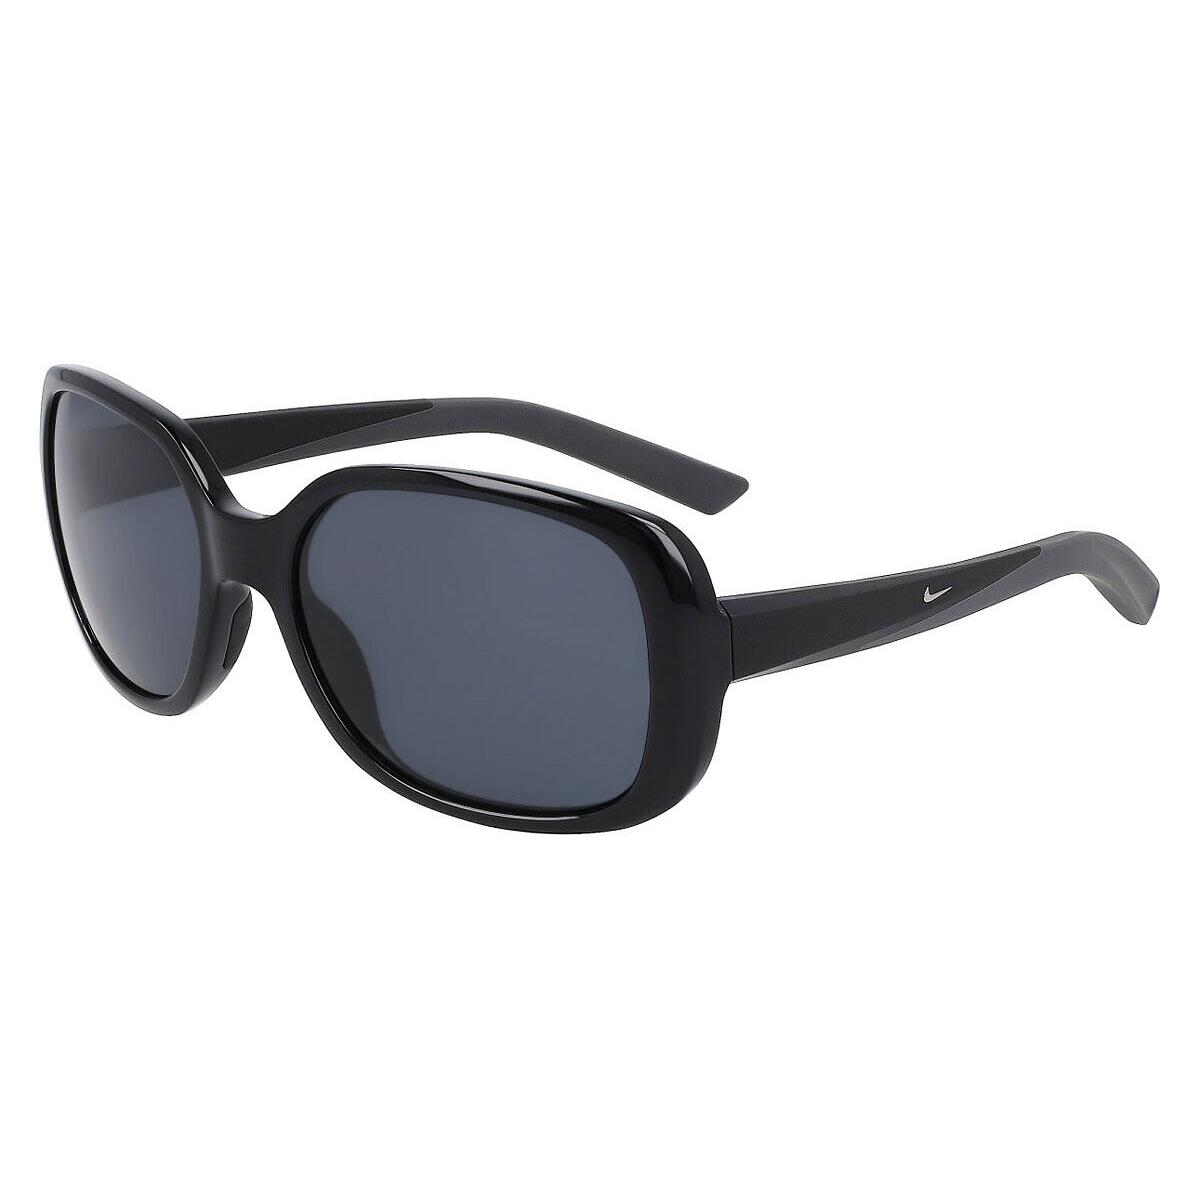 Nike Audacious S FD1883 Sunglasses Black Dark Gray 54mm - Frame: Black / Dark Gray, Lens: Dark Gray